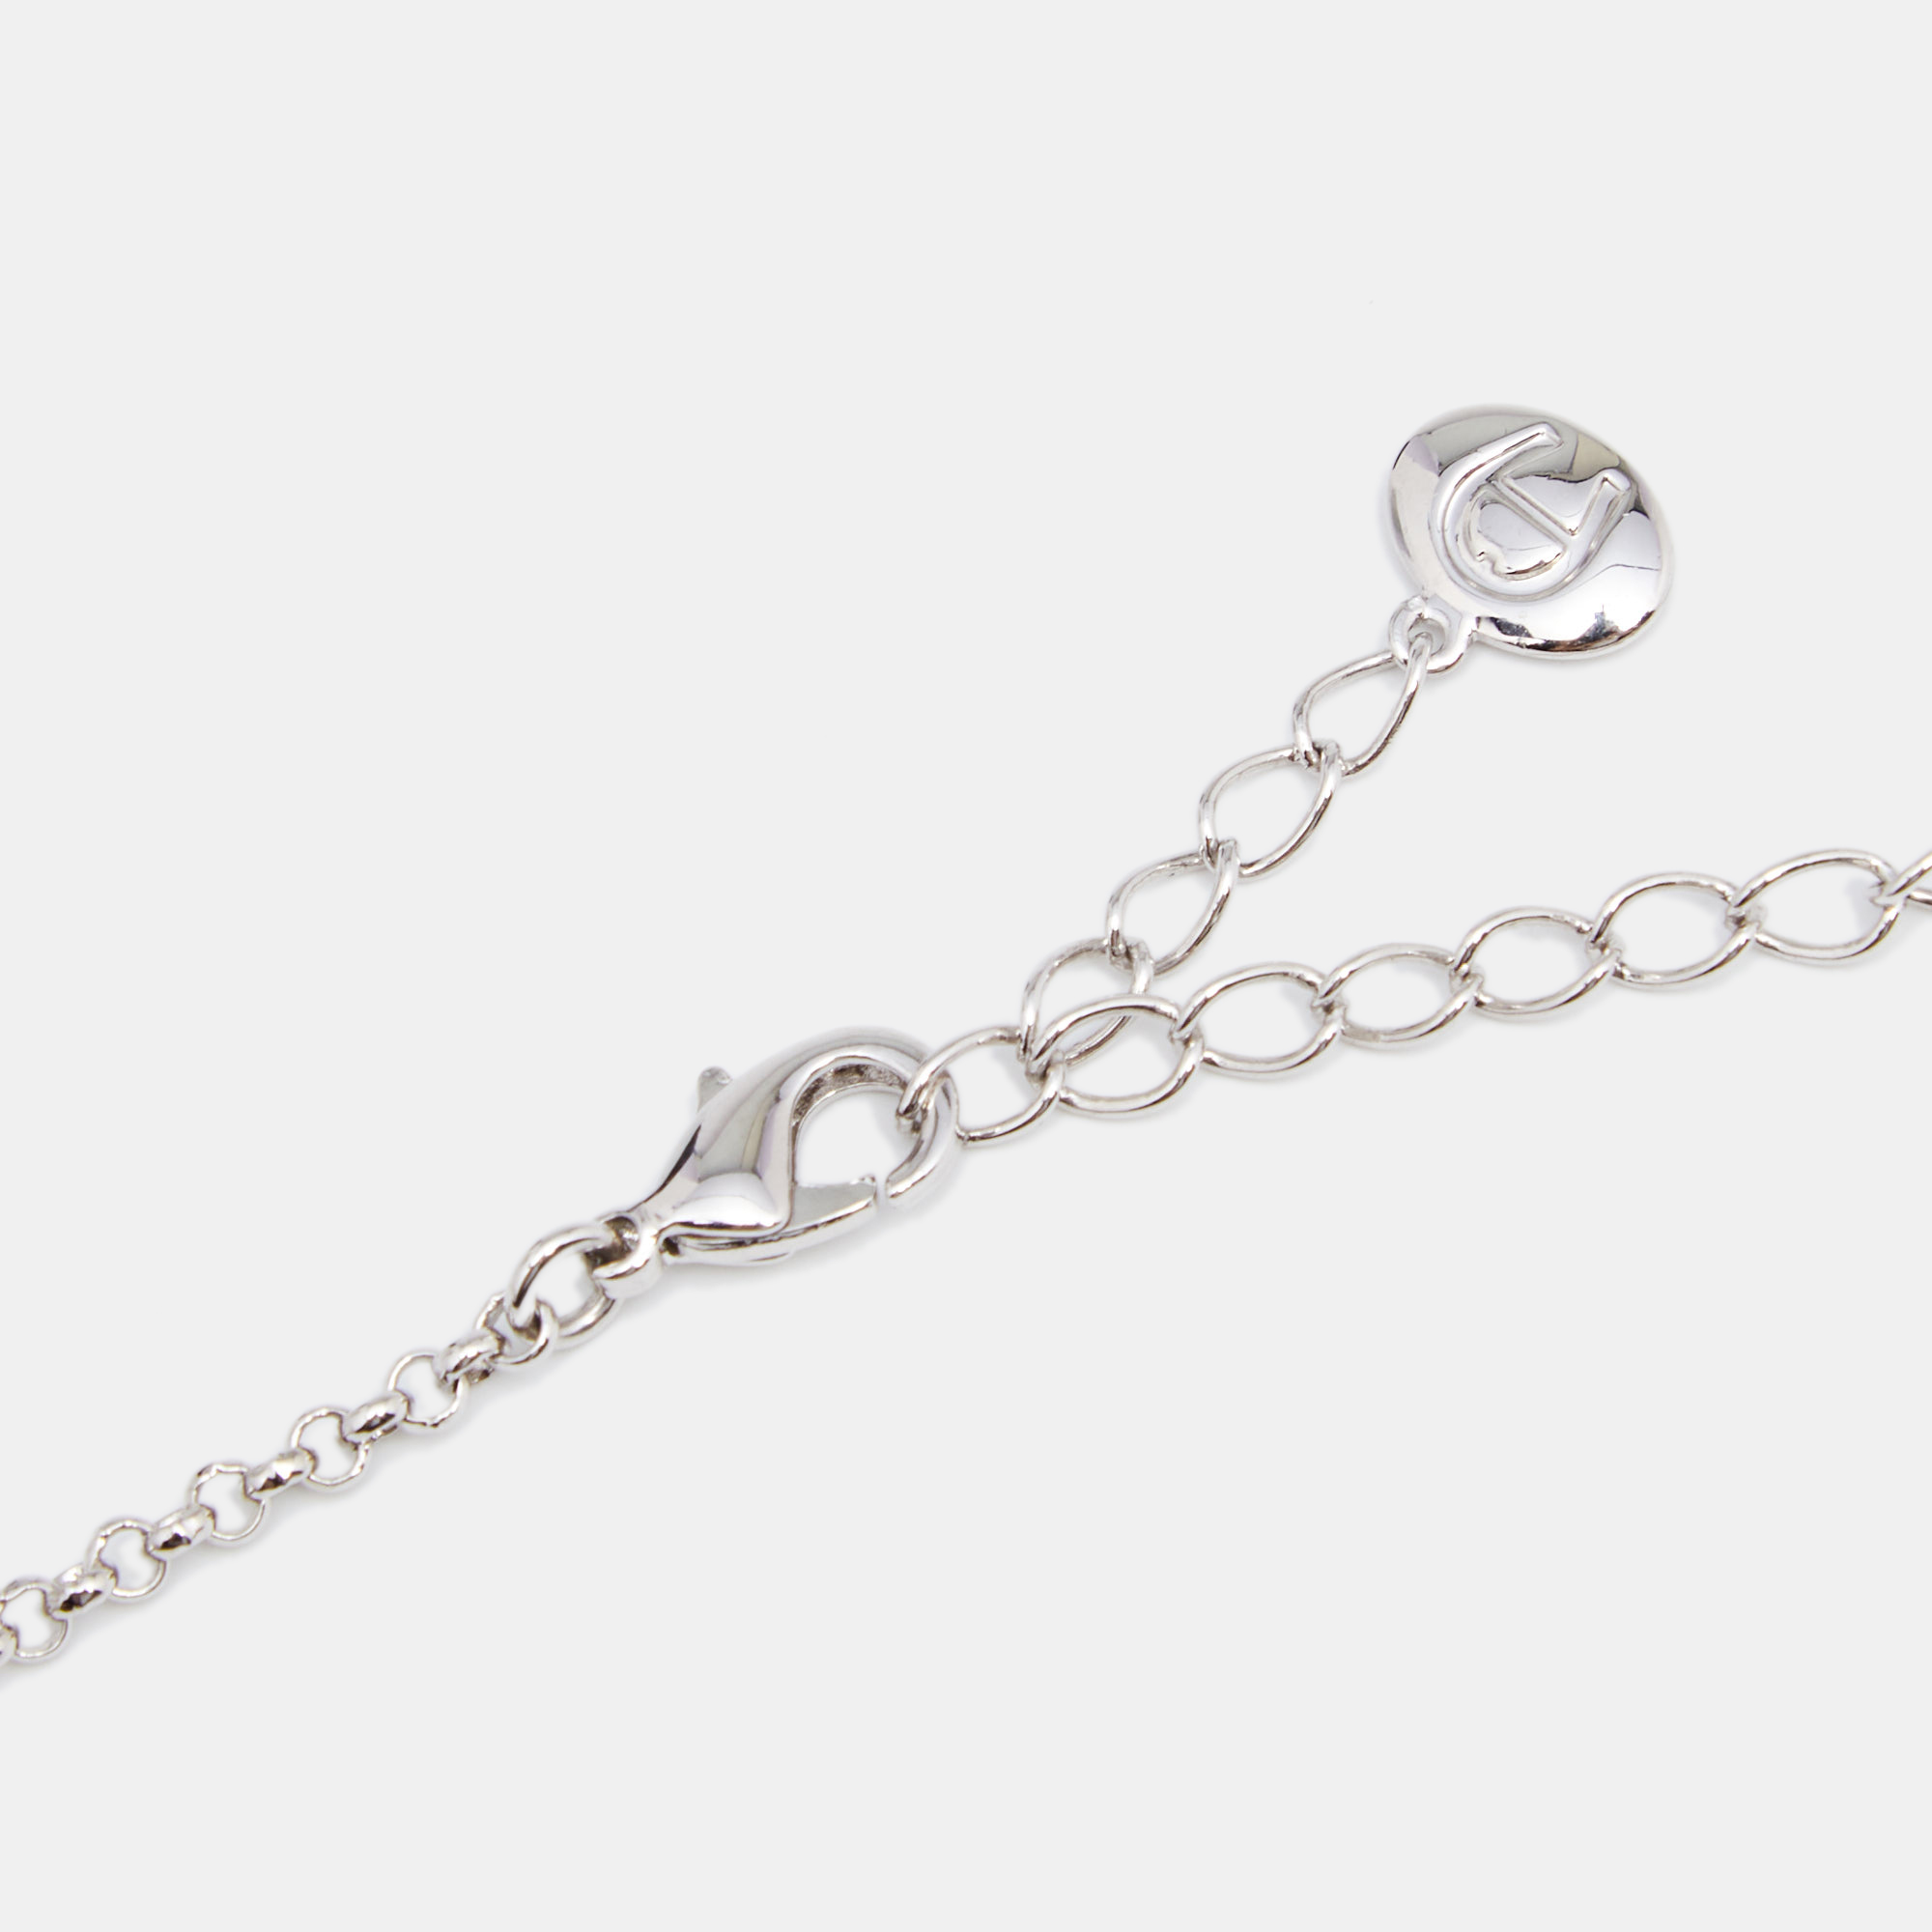 Aigner Silver Tone Crystal Horseshoe Pendant Necklace